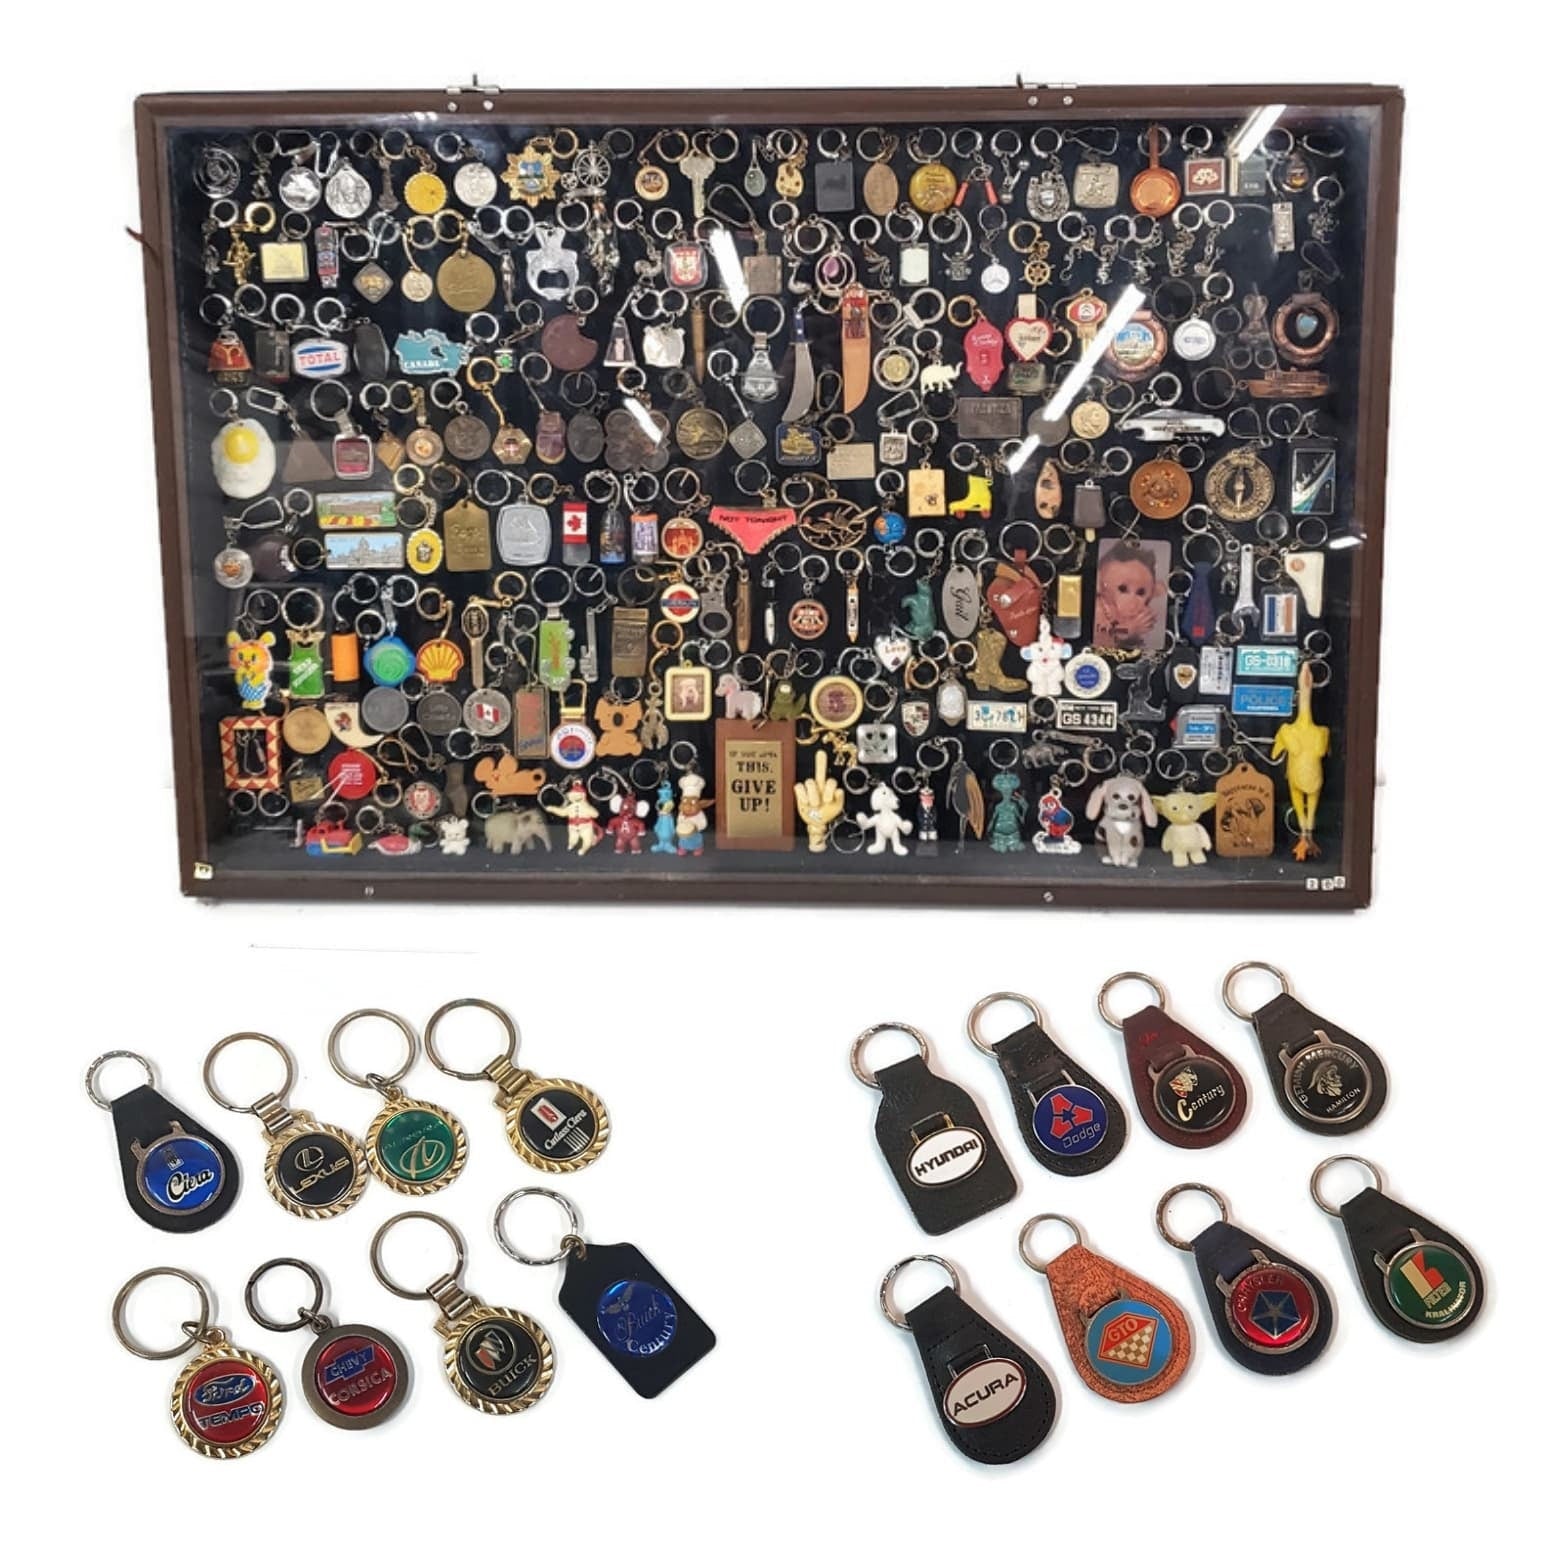 maserati key chain keychain key fob keytag vintage automotove keychain gift collectible